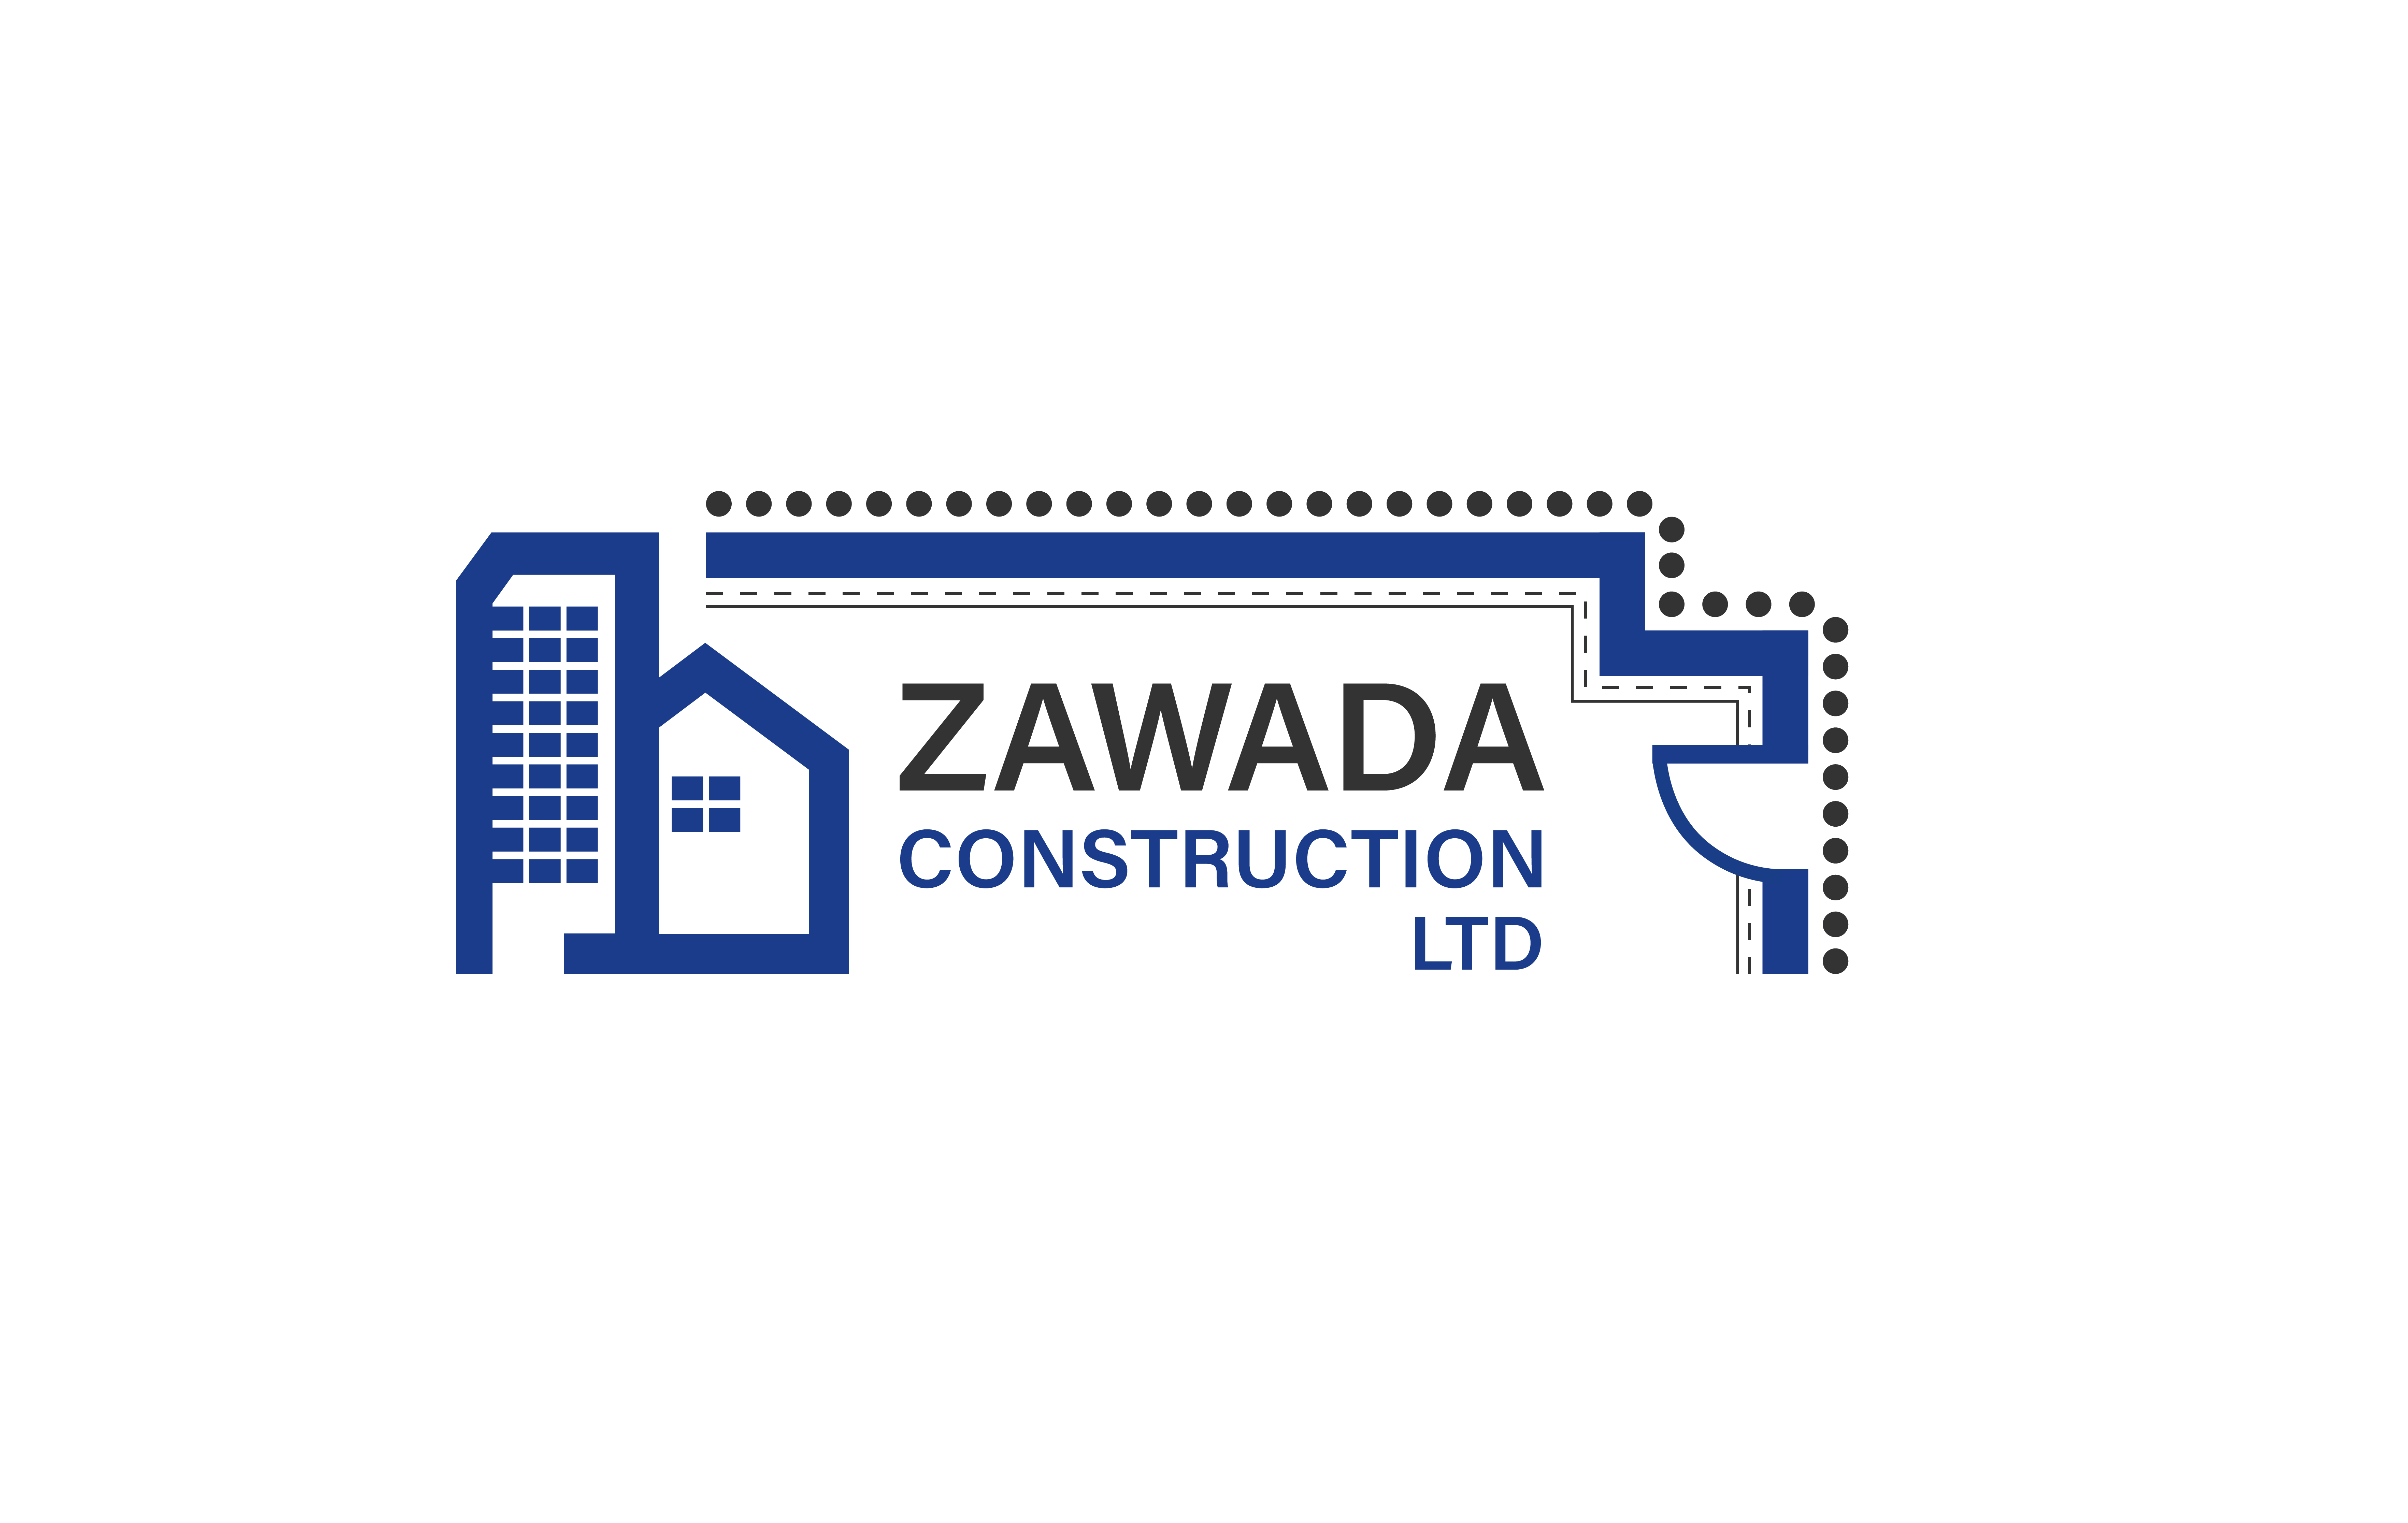 Zawada Construction Ltd. Groundwork Company London